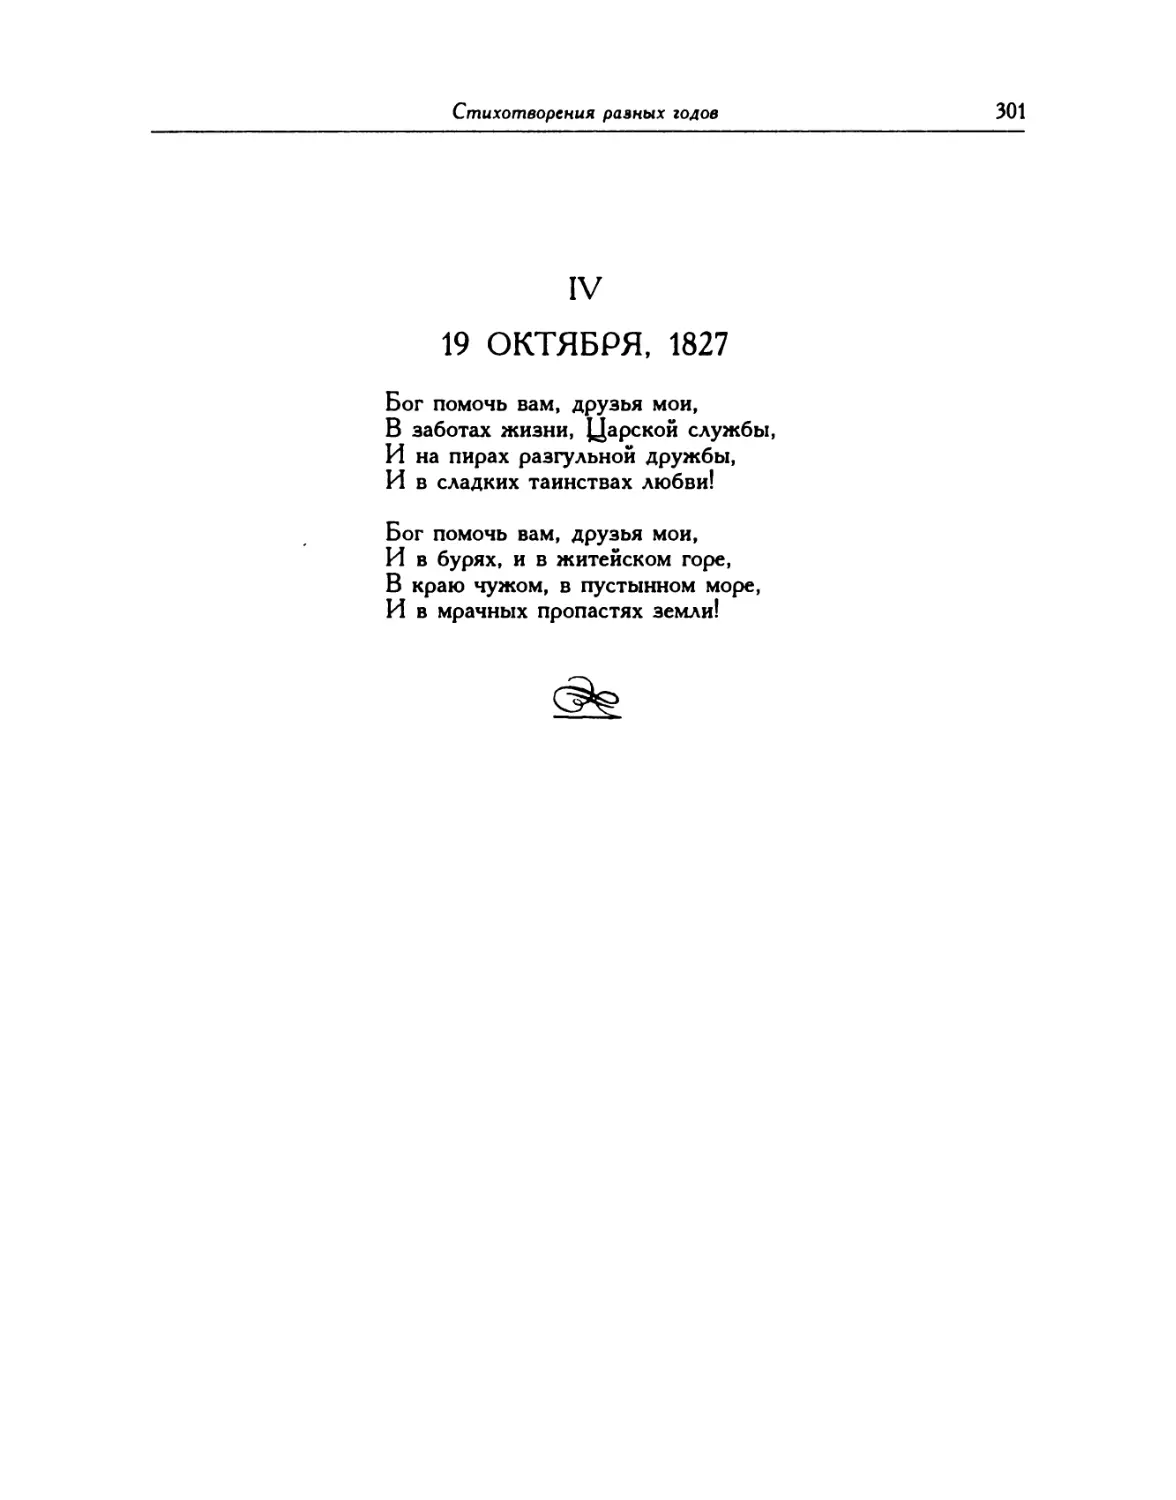 IV. 19 Октября, 1827